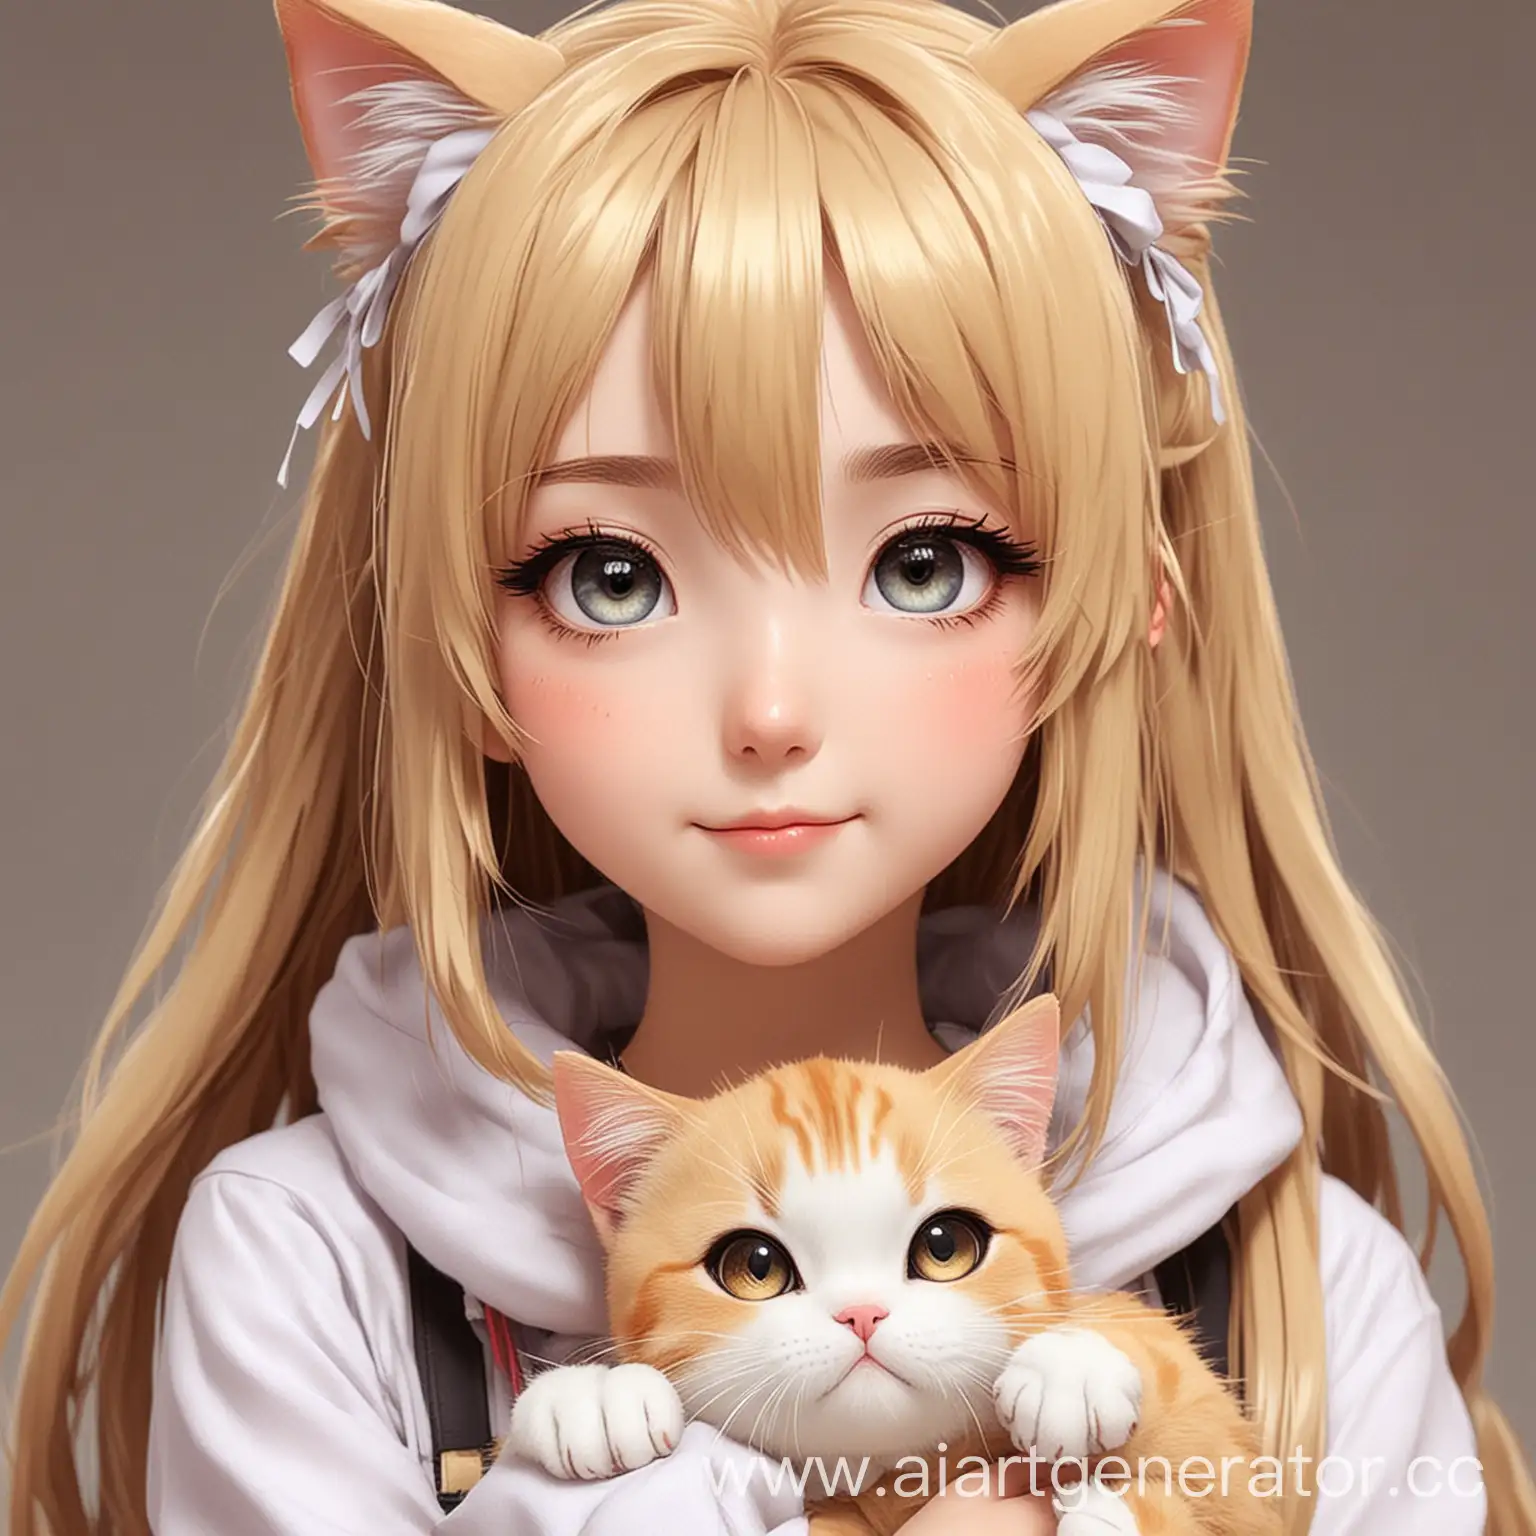 Cute anime girl and Neko the cat